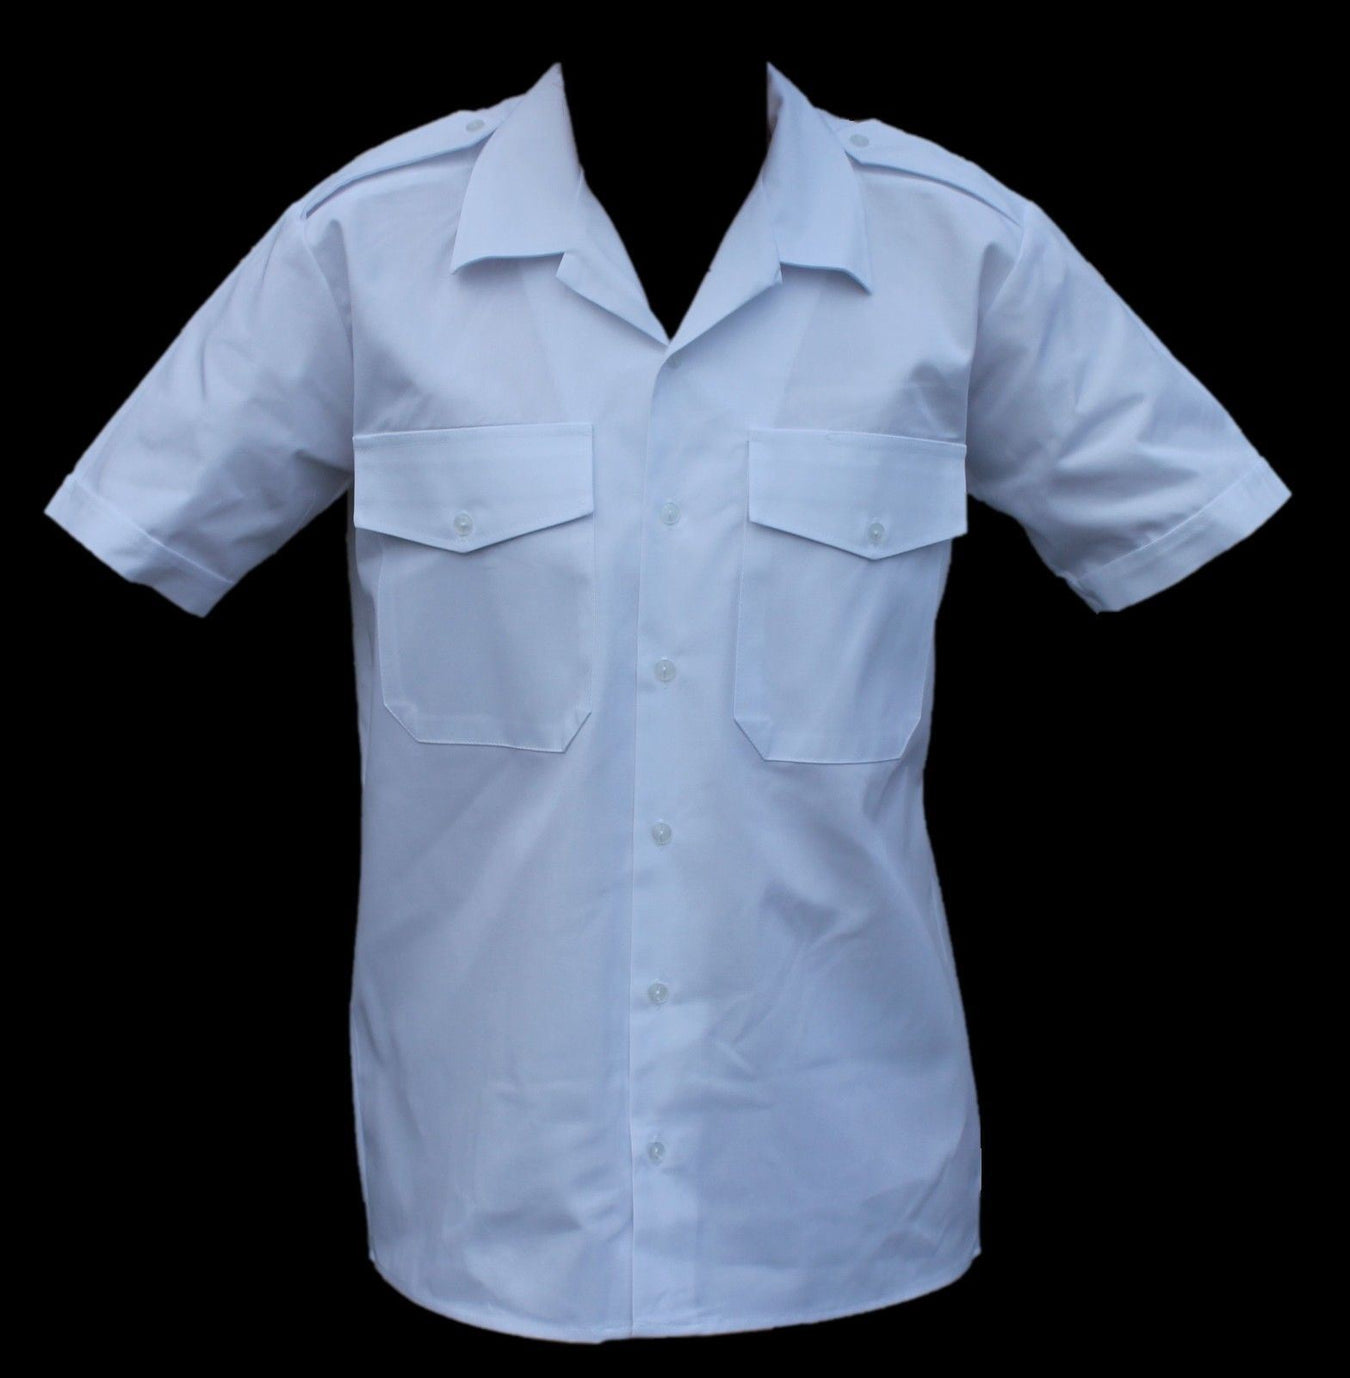 Male Uniform Shirts